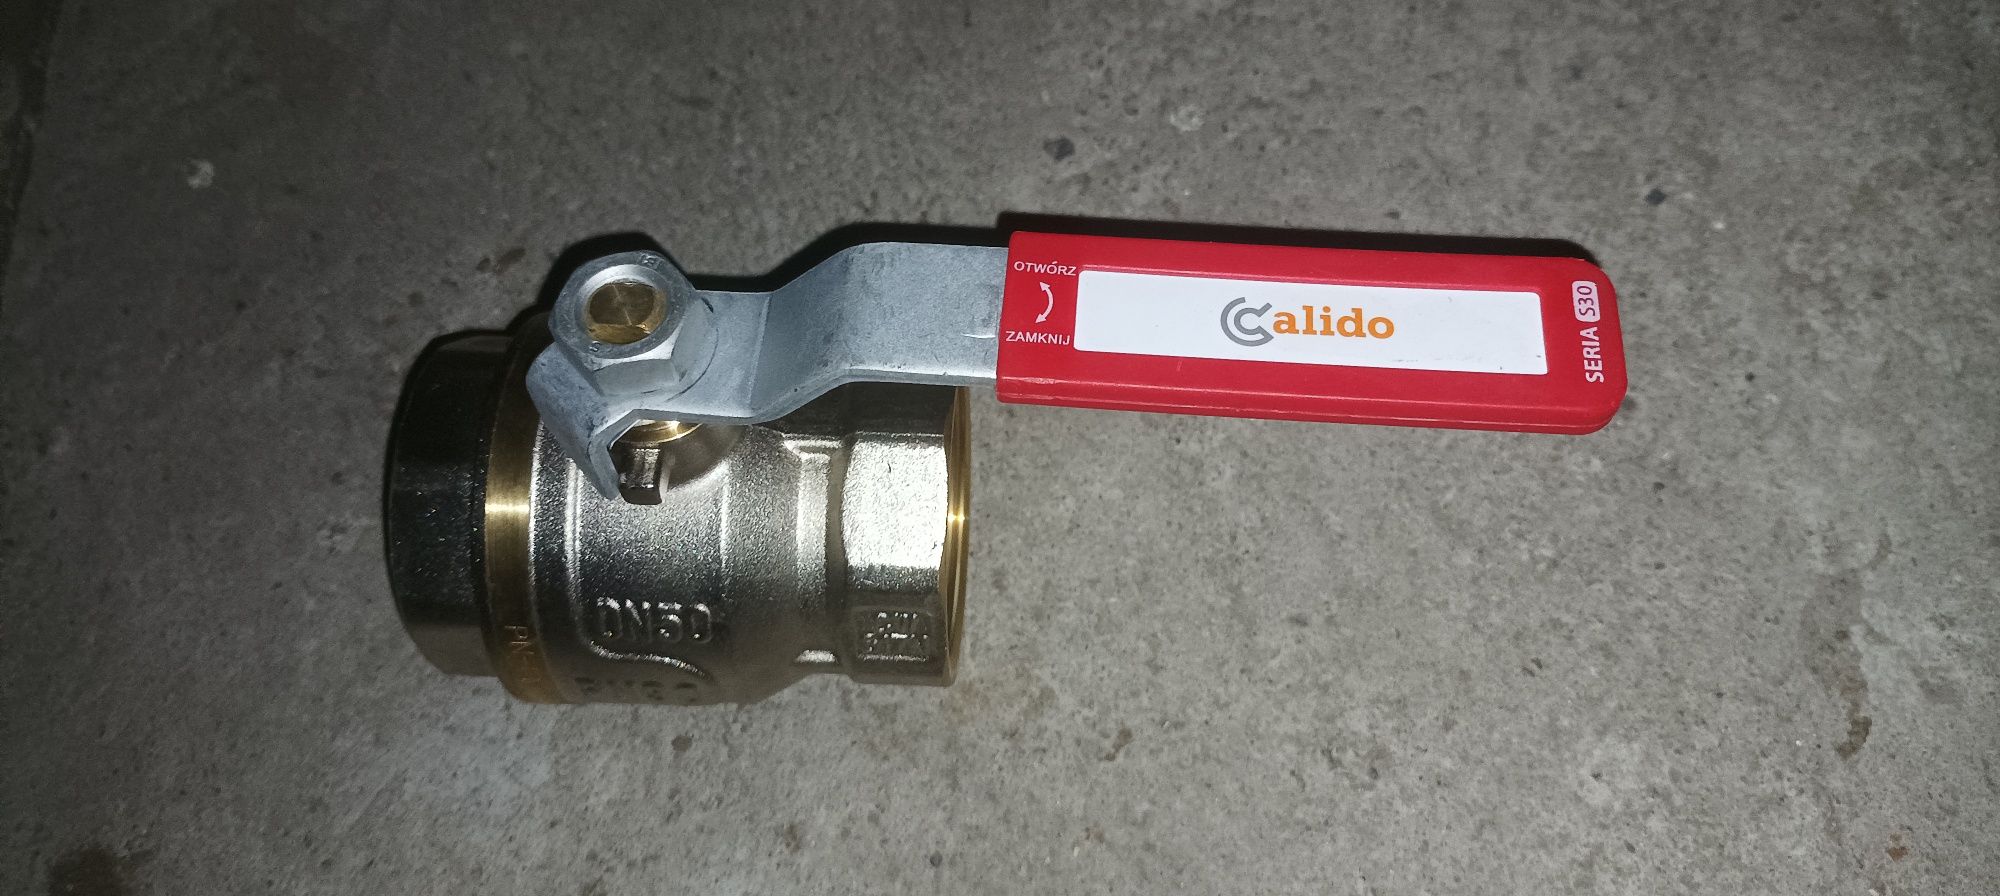 Zawór kulowy Calido  2"  DN50 PN30 2cale